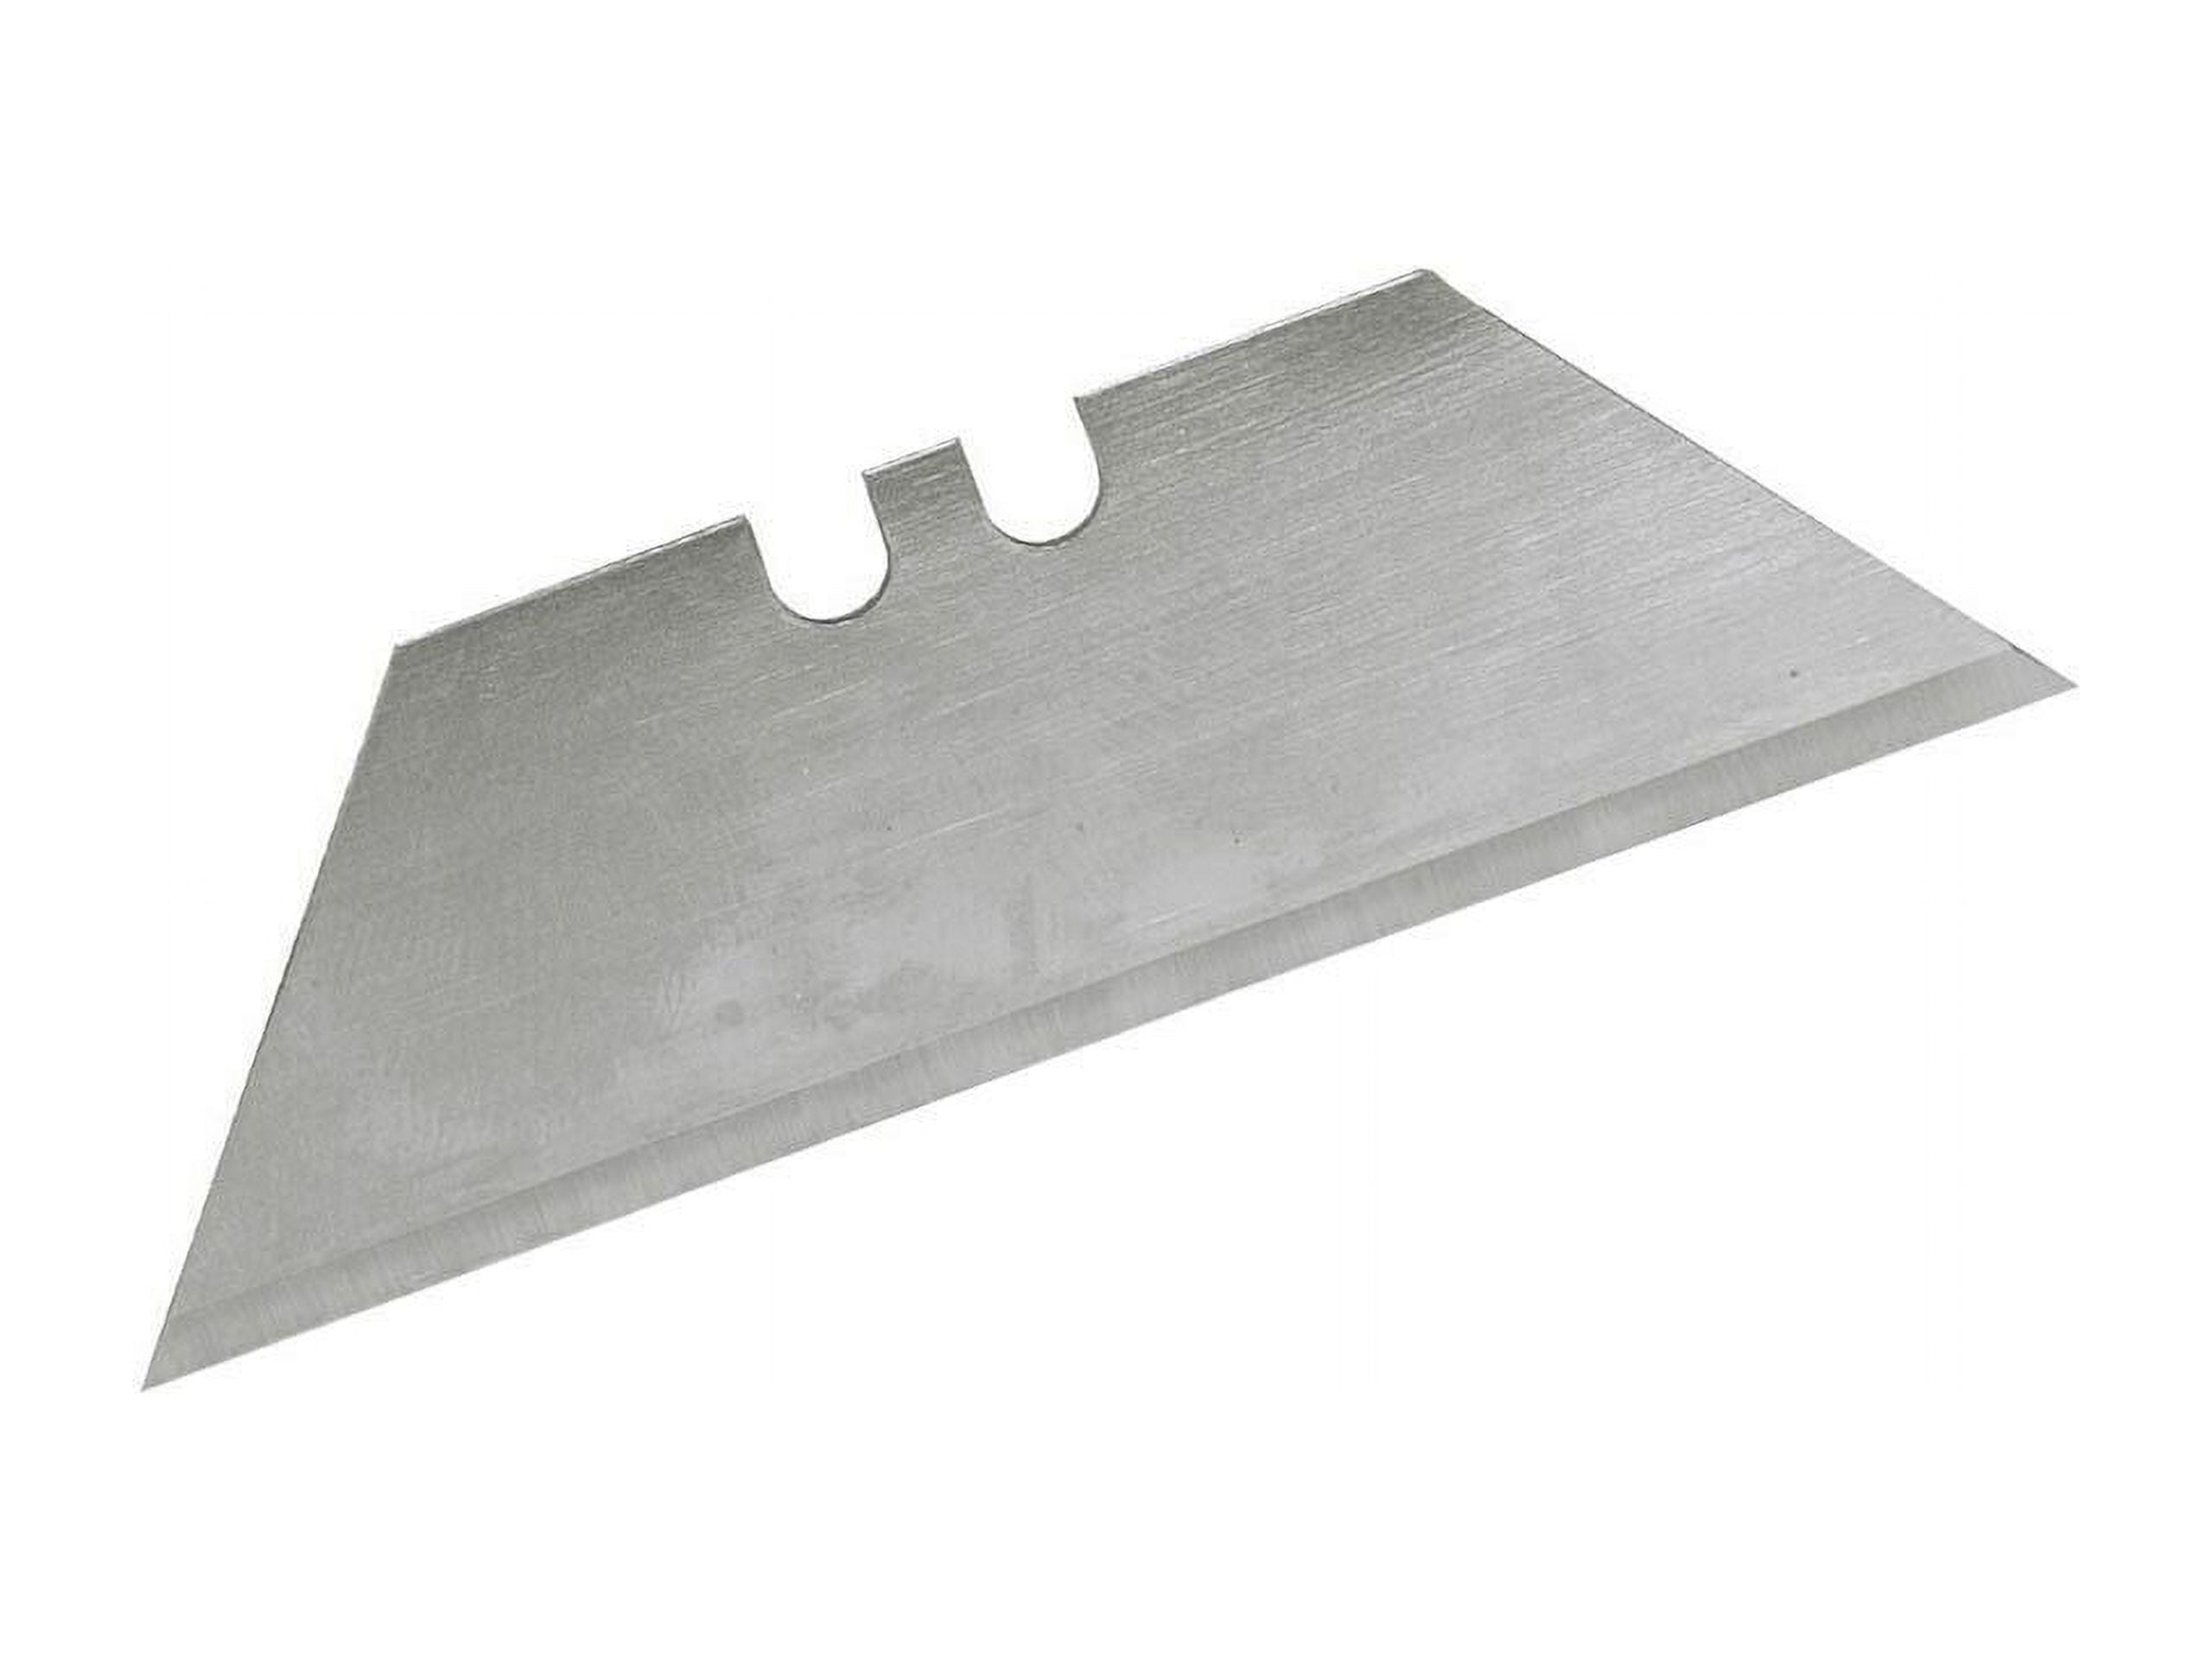 UTILITY KNIFE BLADES Replacement Refill Standard Razor Box Cutter